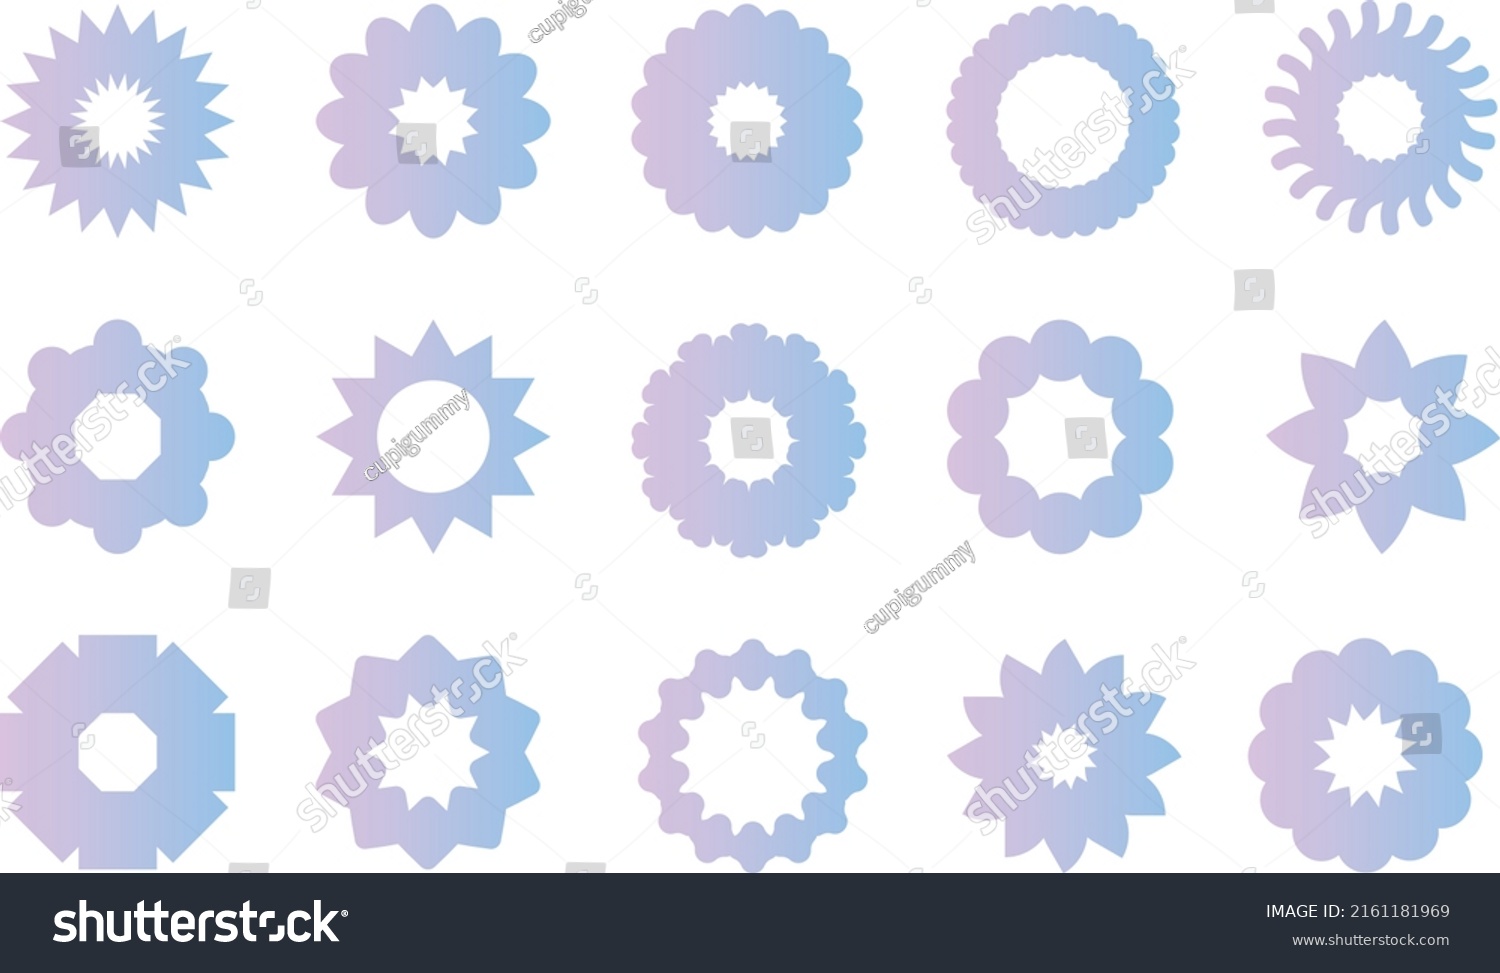 SVG of Scalloped Circle Shape, Frame, and Border. Flower Shape and Gear Vector Elements Bundle Set. svg